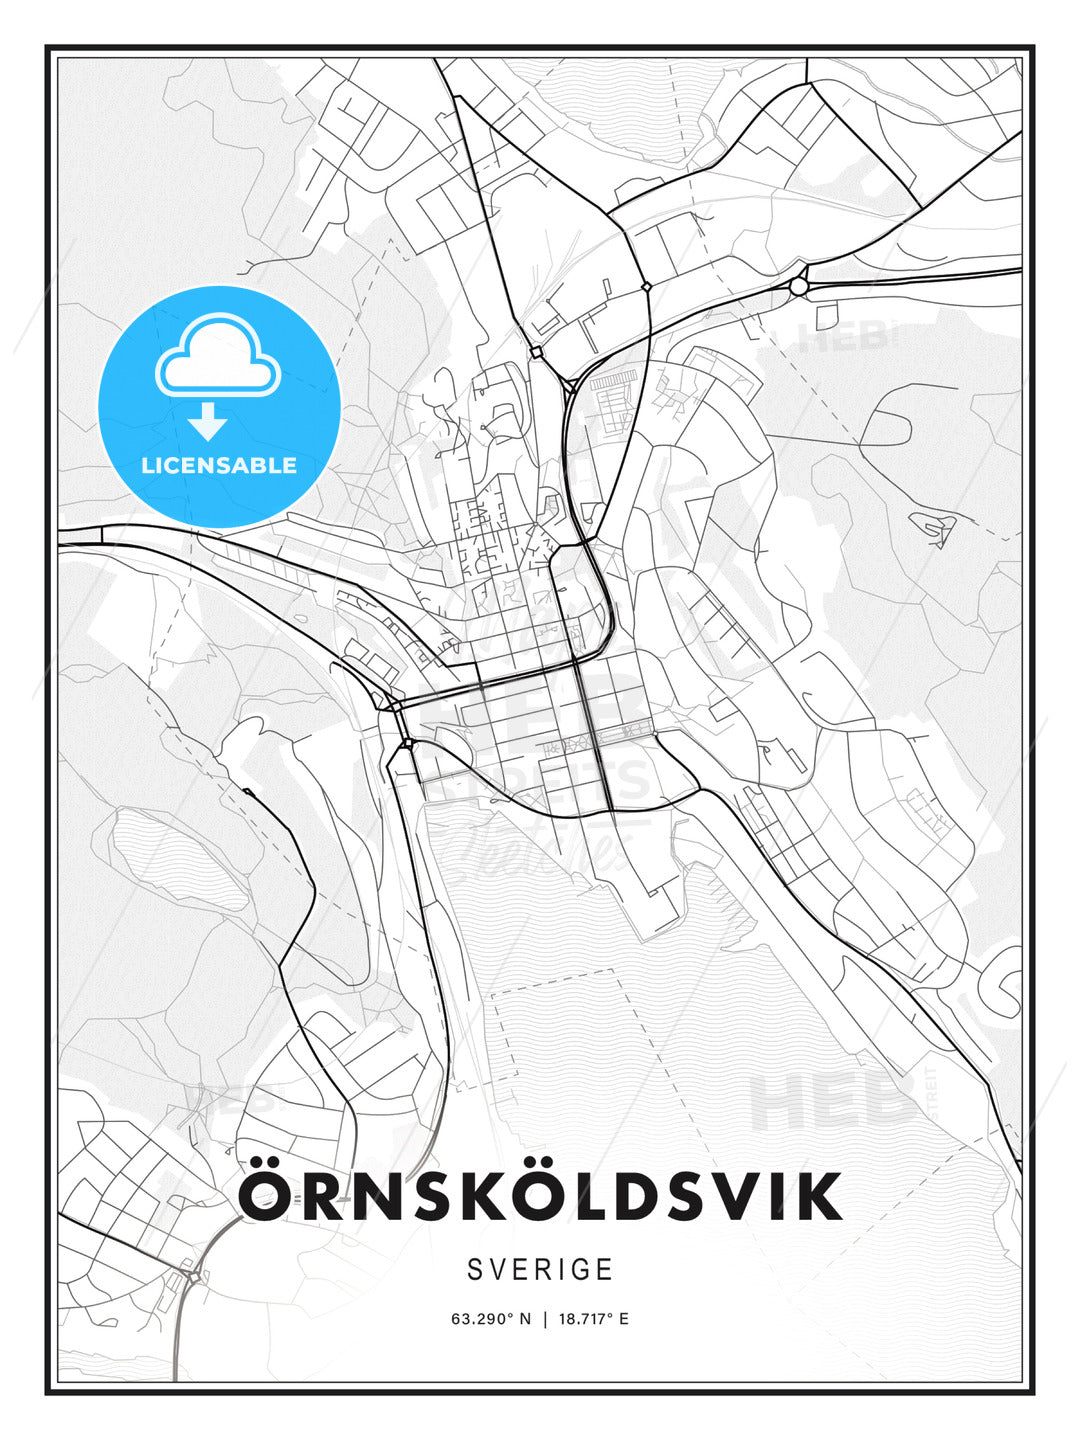 Örnsköldsvik, Sweden, Modern Print Template in Various Formats - HEBSTREITS Sketches